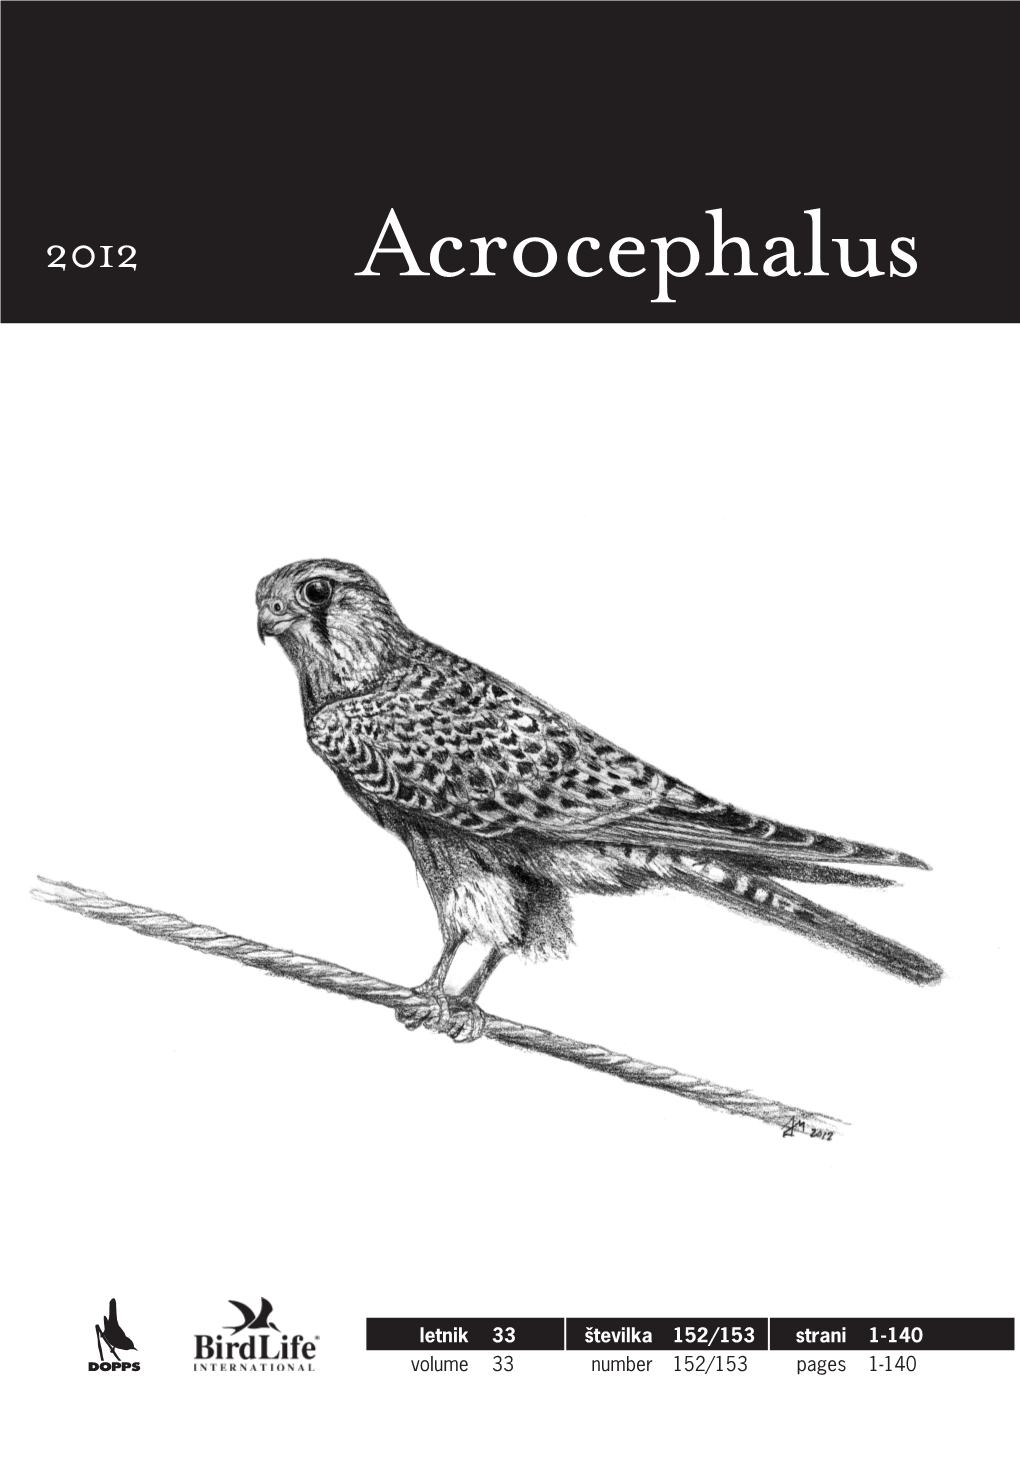 Acrocephalus